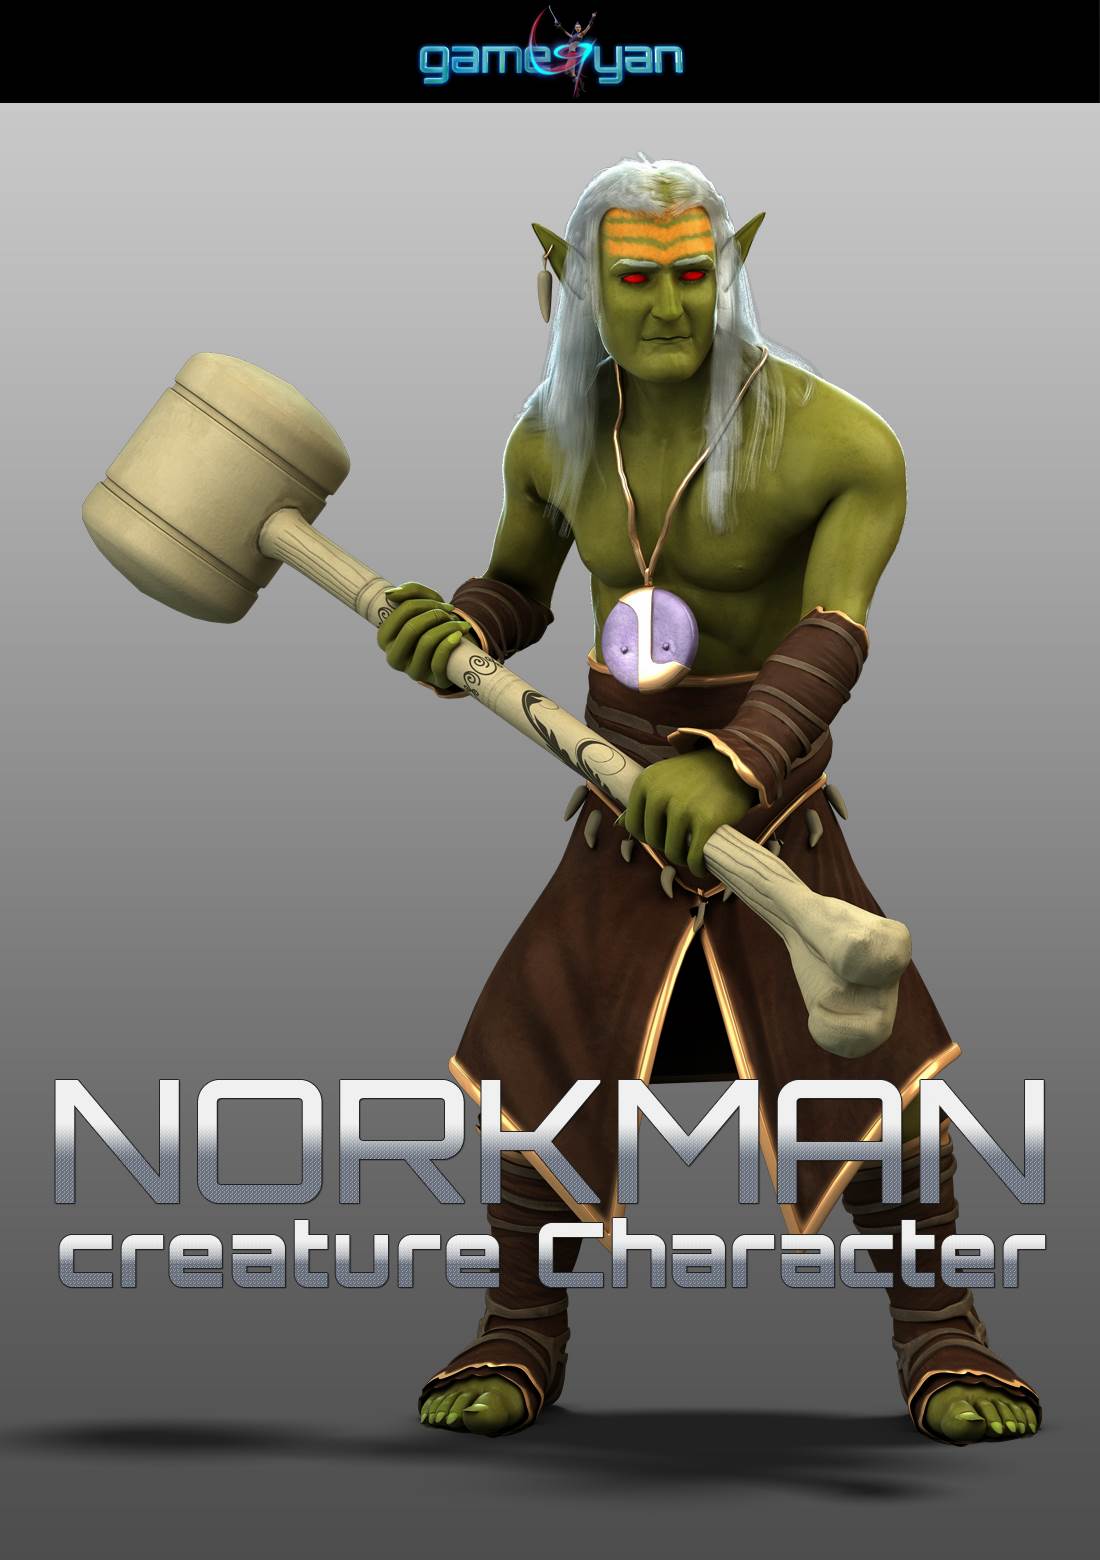 3D Norkman – Character Cartoon Animation Companies By GameYan 3D Animation Studio